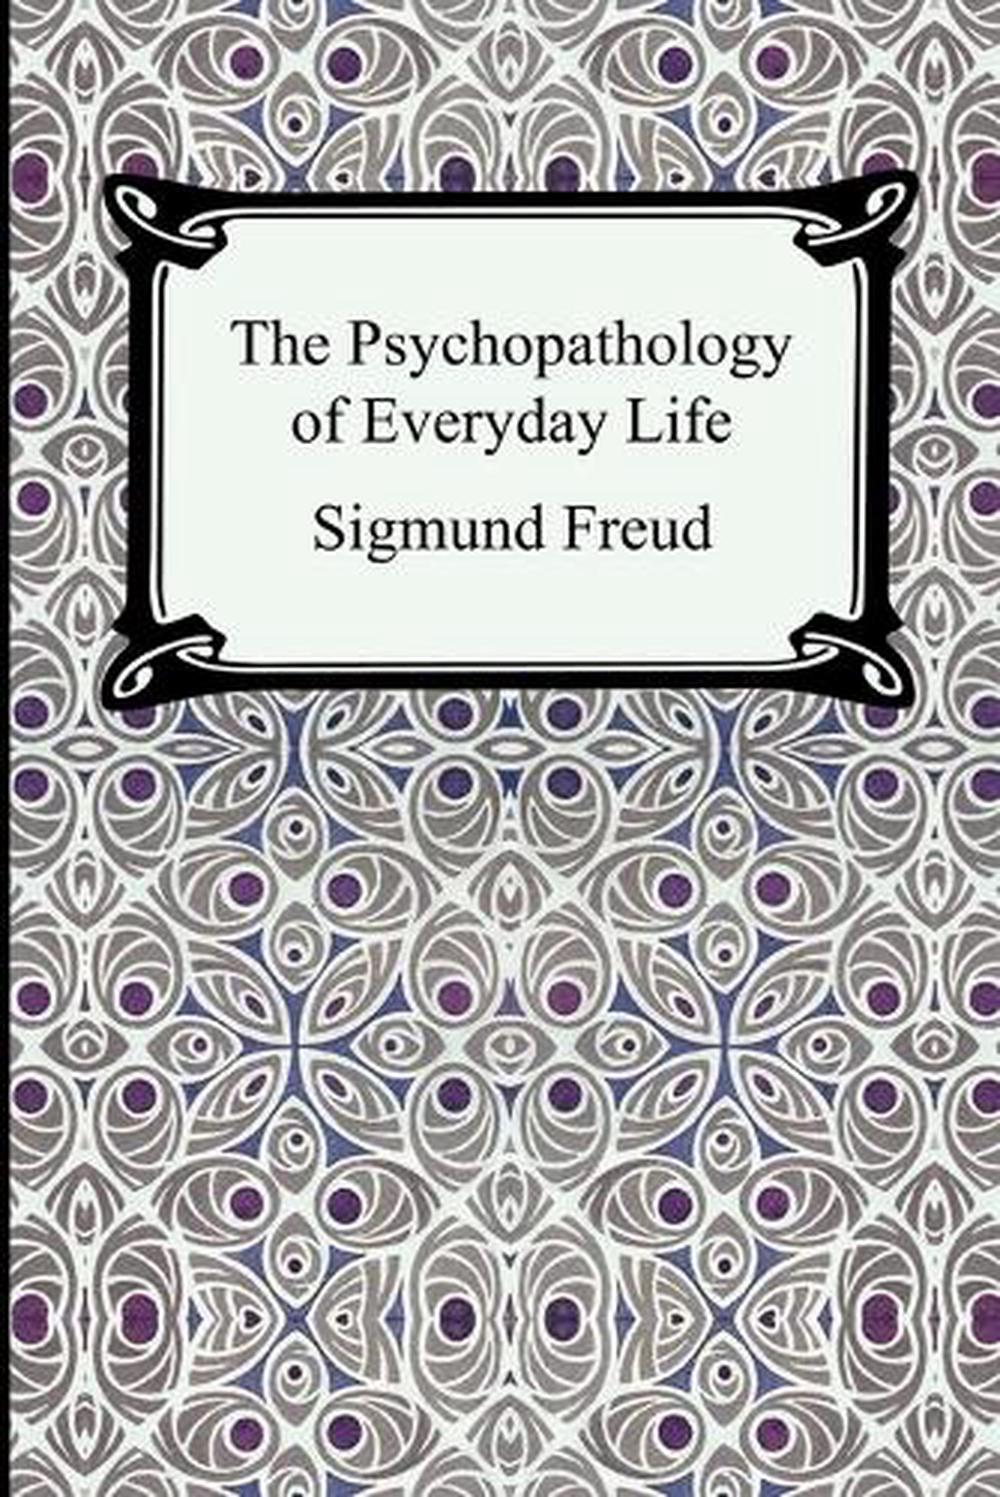 The Psychopathology of Everyday Life by Sigmund Freud